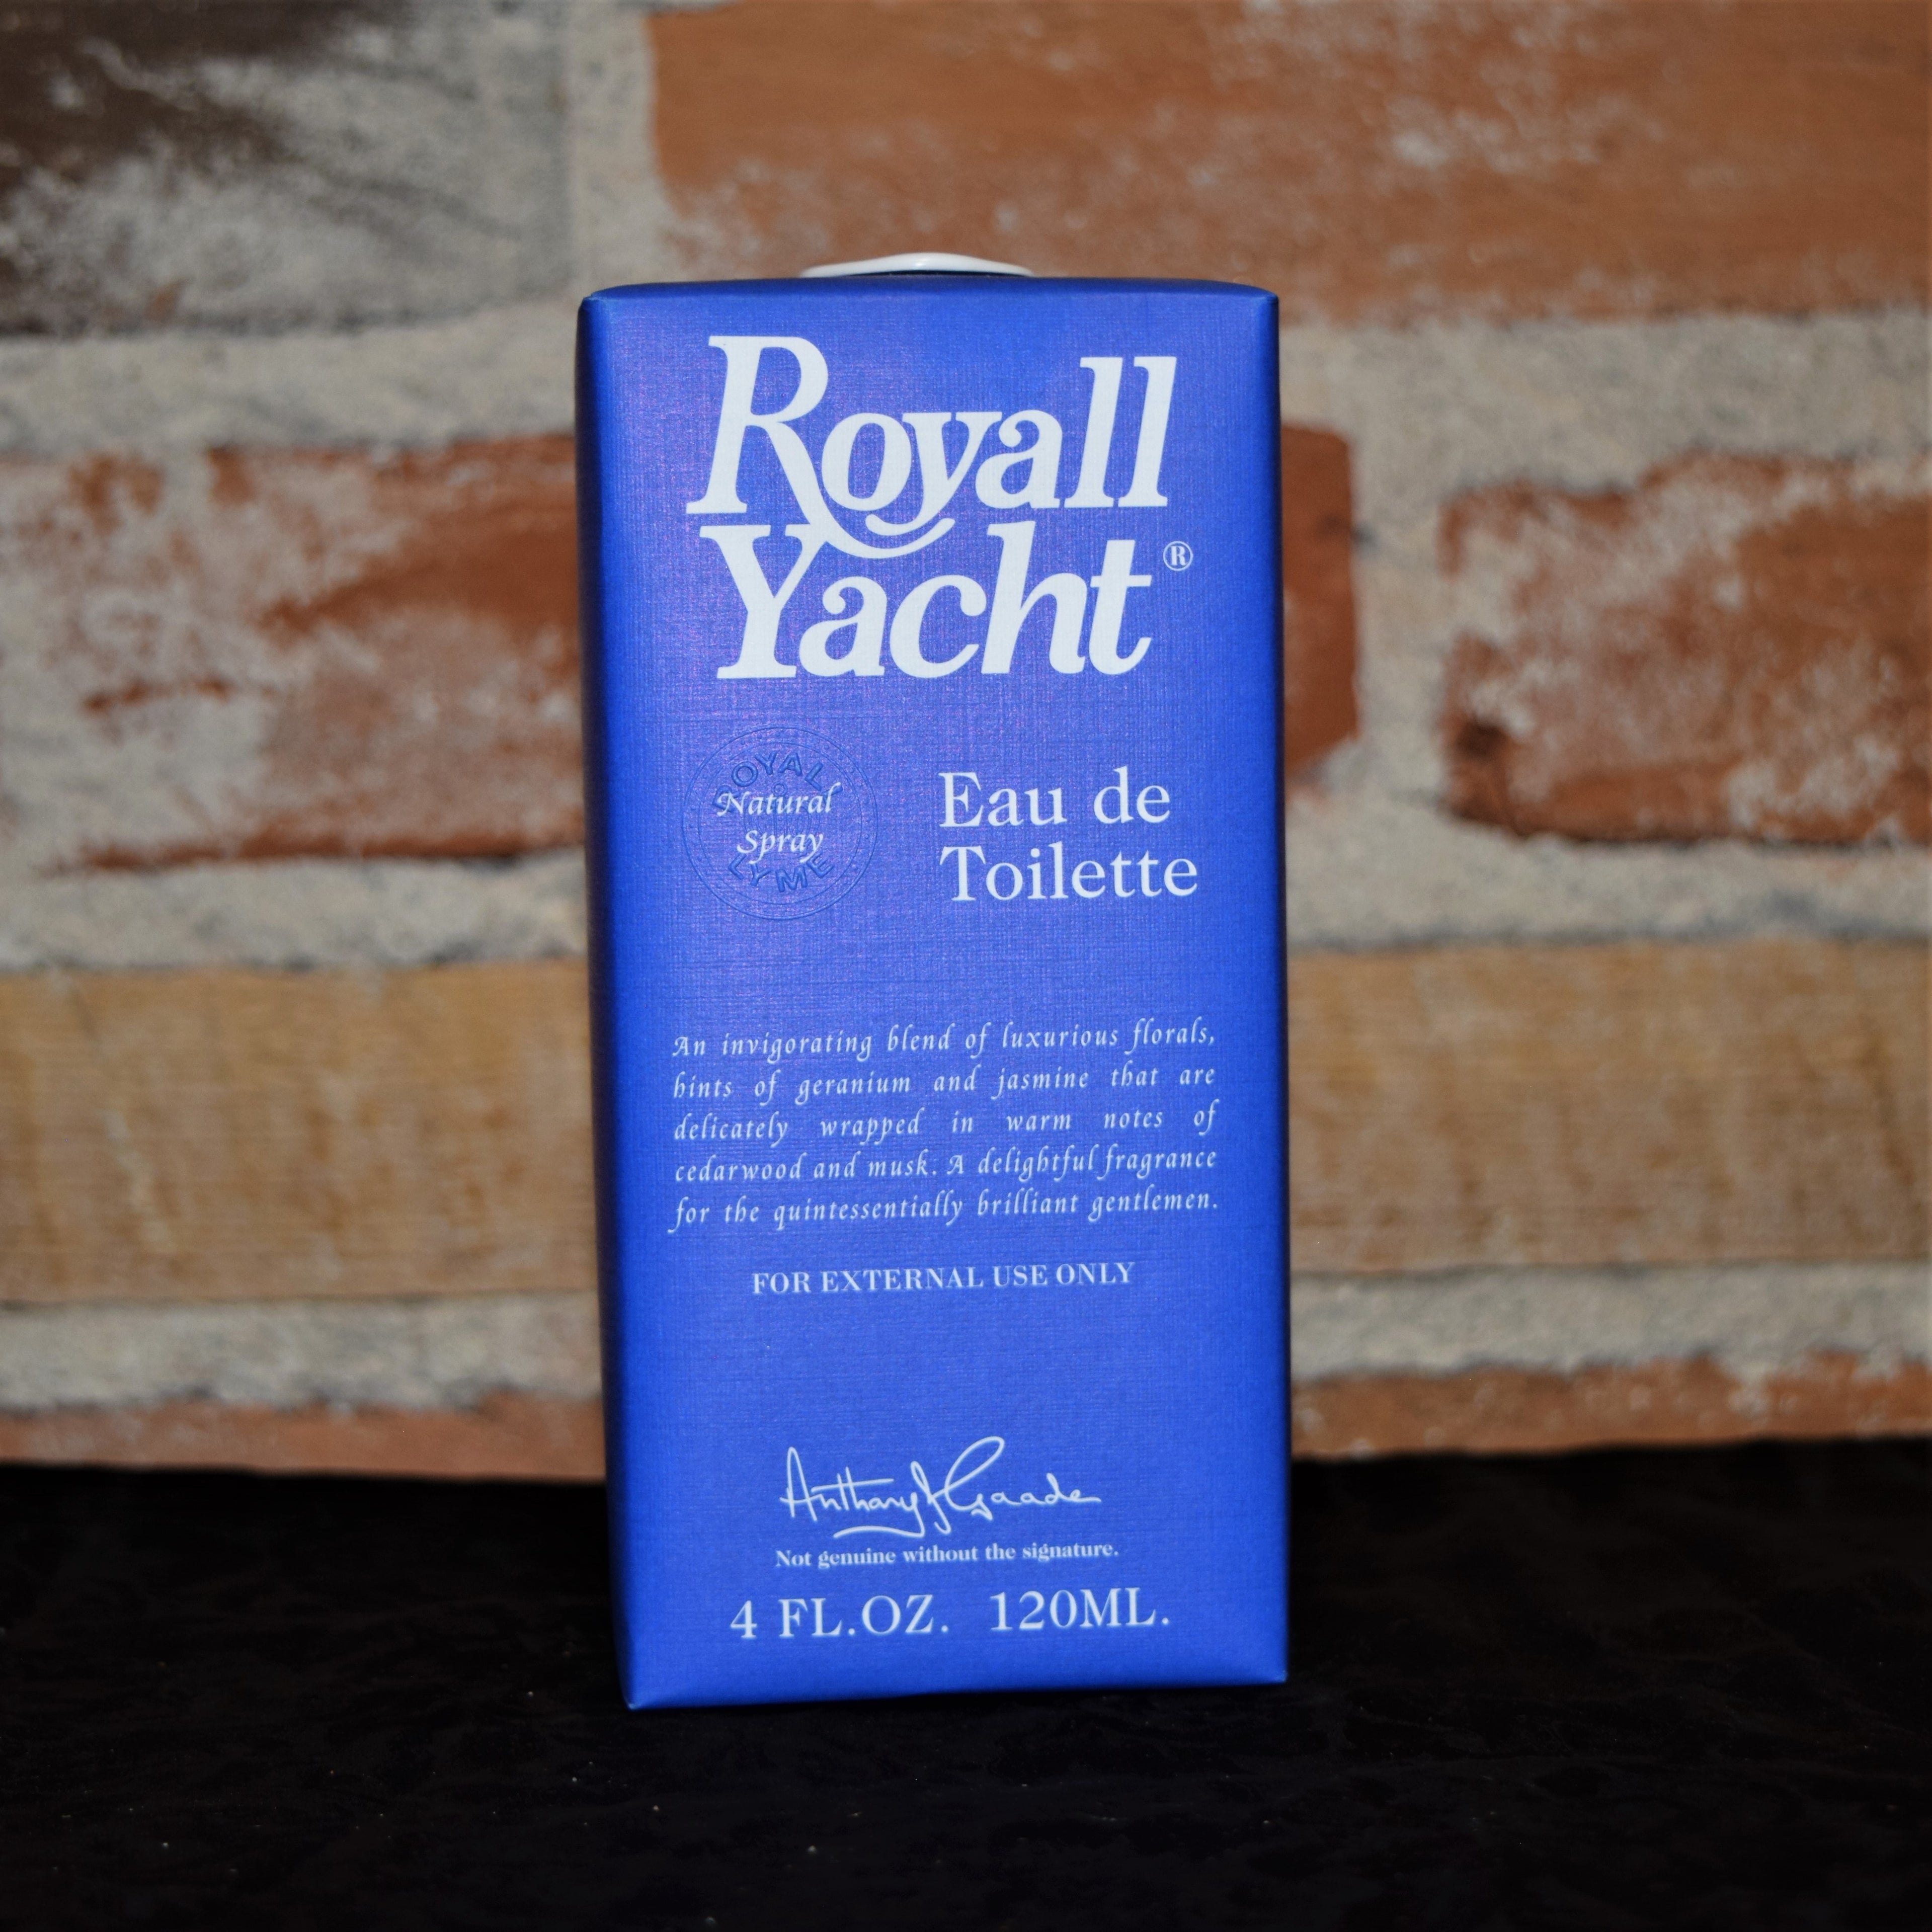 Royall Yacht 4 oz. Natural Spray Cologne